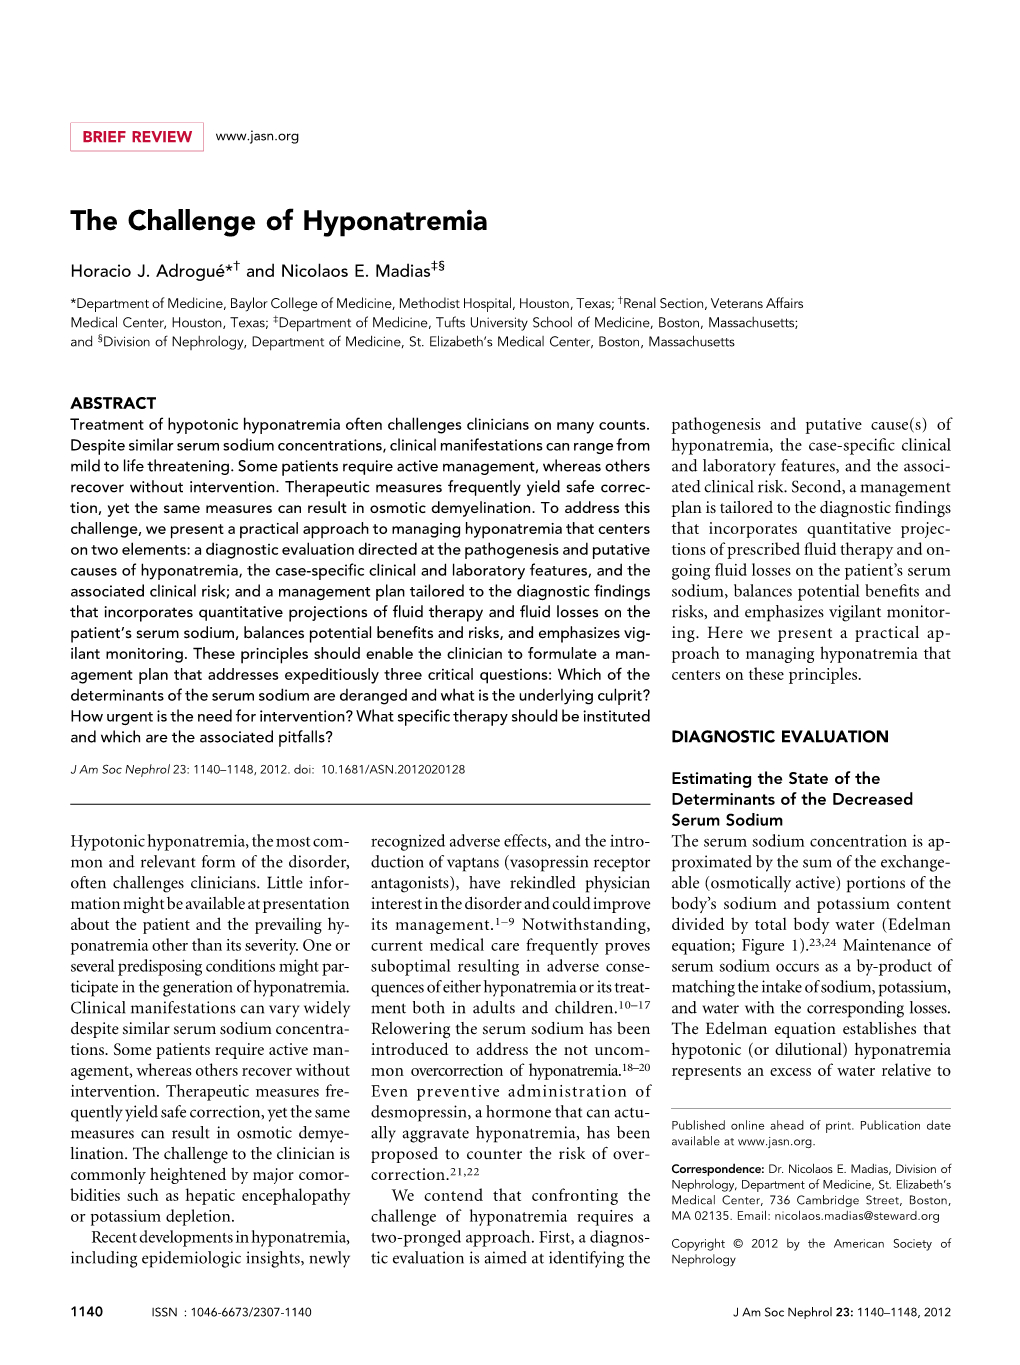 The Challenge of Hyponatremia